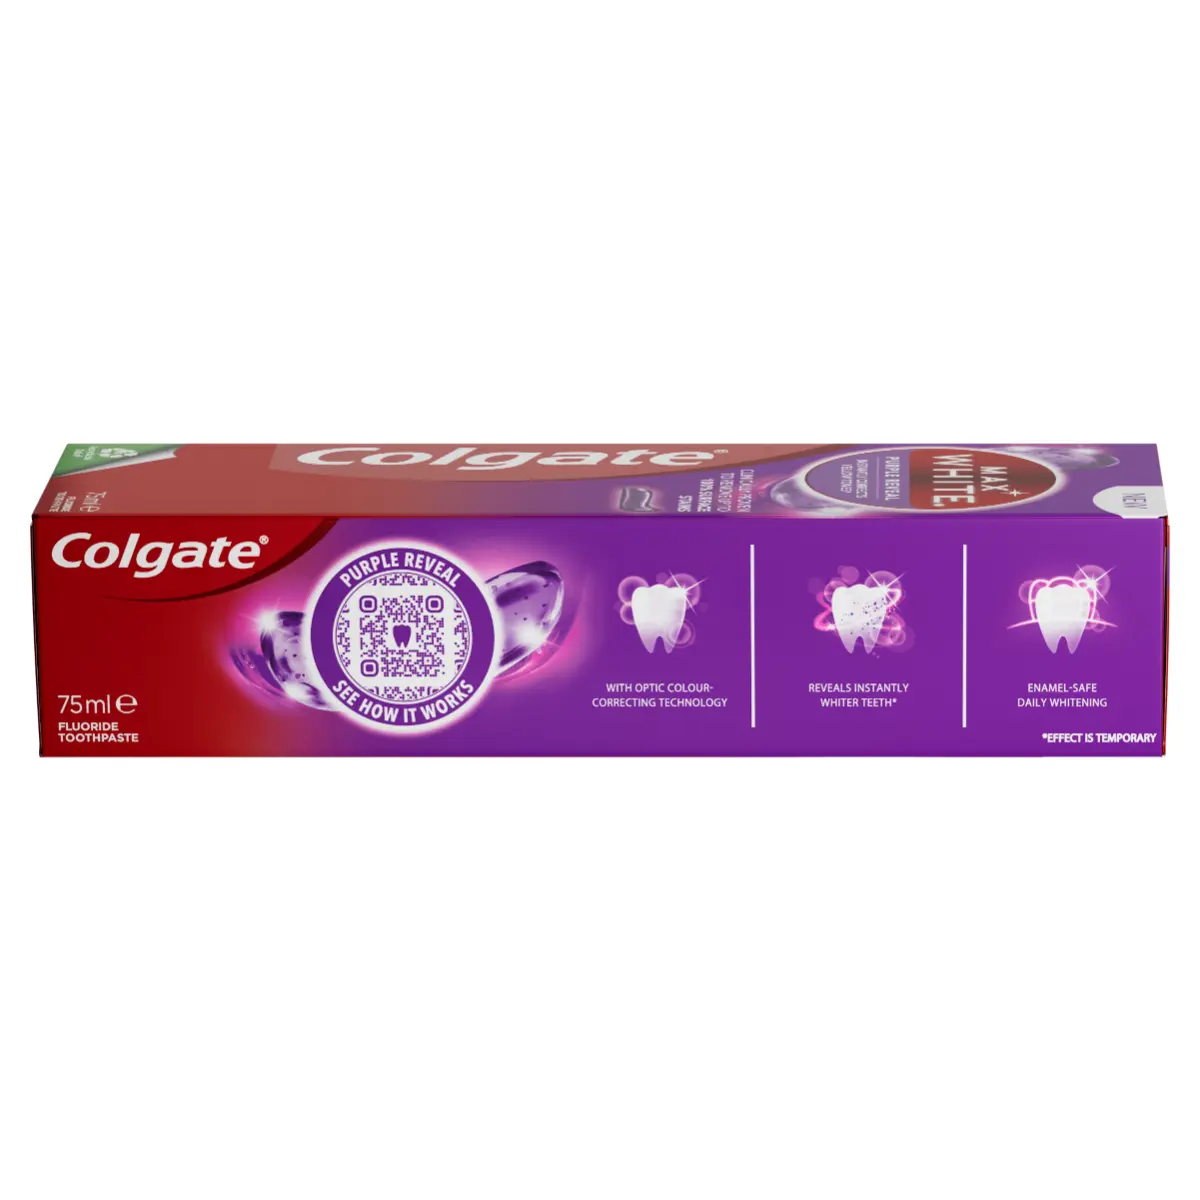 Pasta de dinti pentru albire Colgate Max White Purple Reveal, 75ml